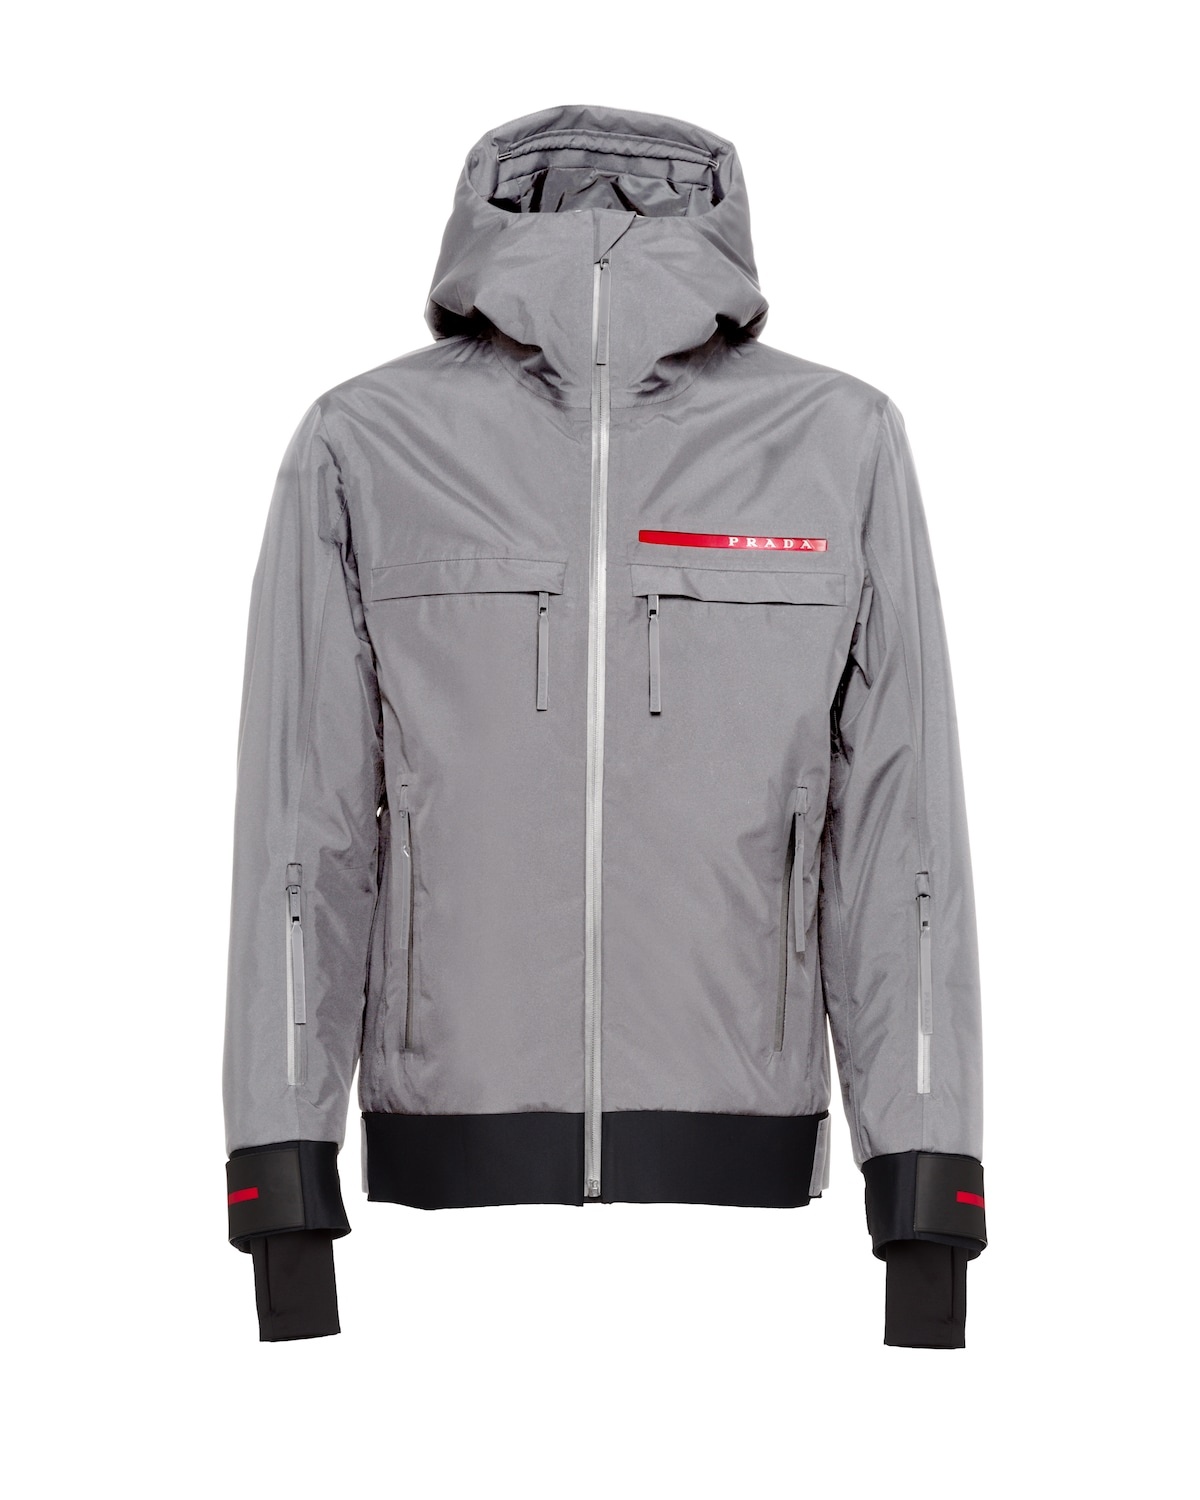 GORE-TEX ski jacket - 1